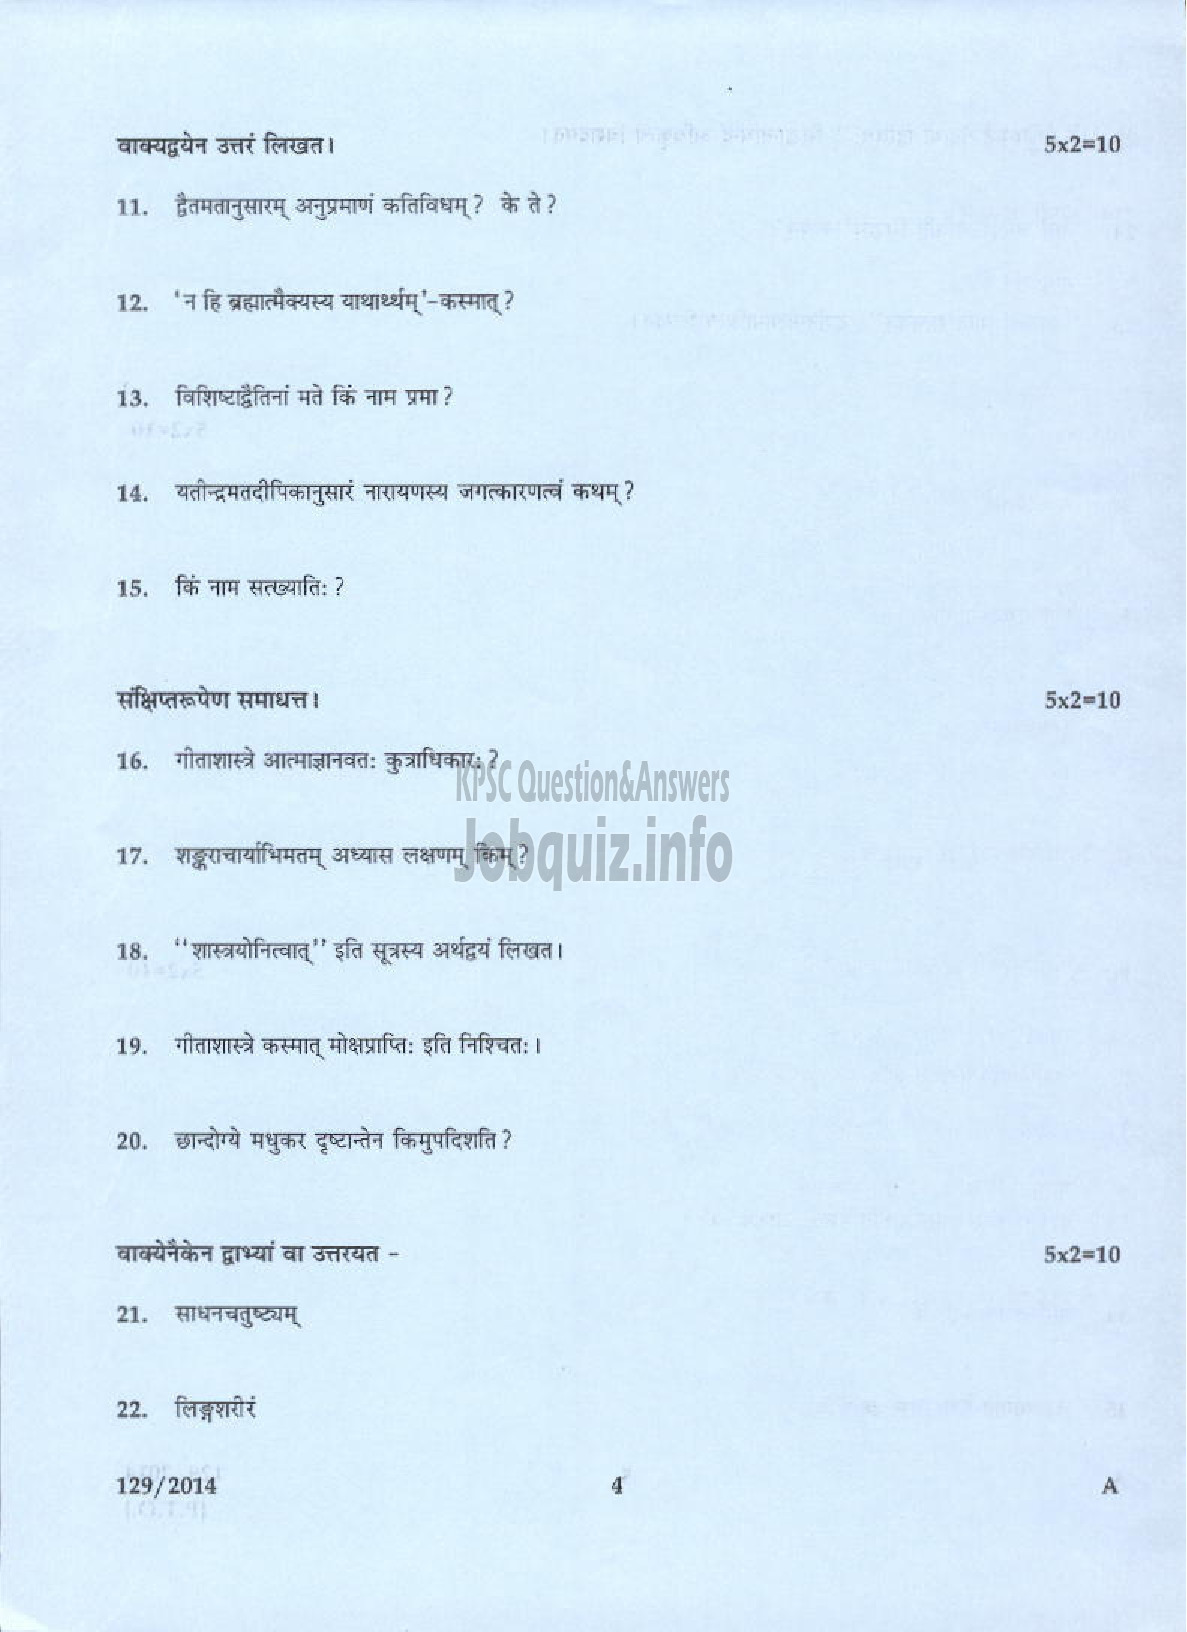 Kerala PSC Question Paper - LECTURER IN SANSKRIT VEDANTA KERALA COLLEGIATE EDUCATION-2